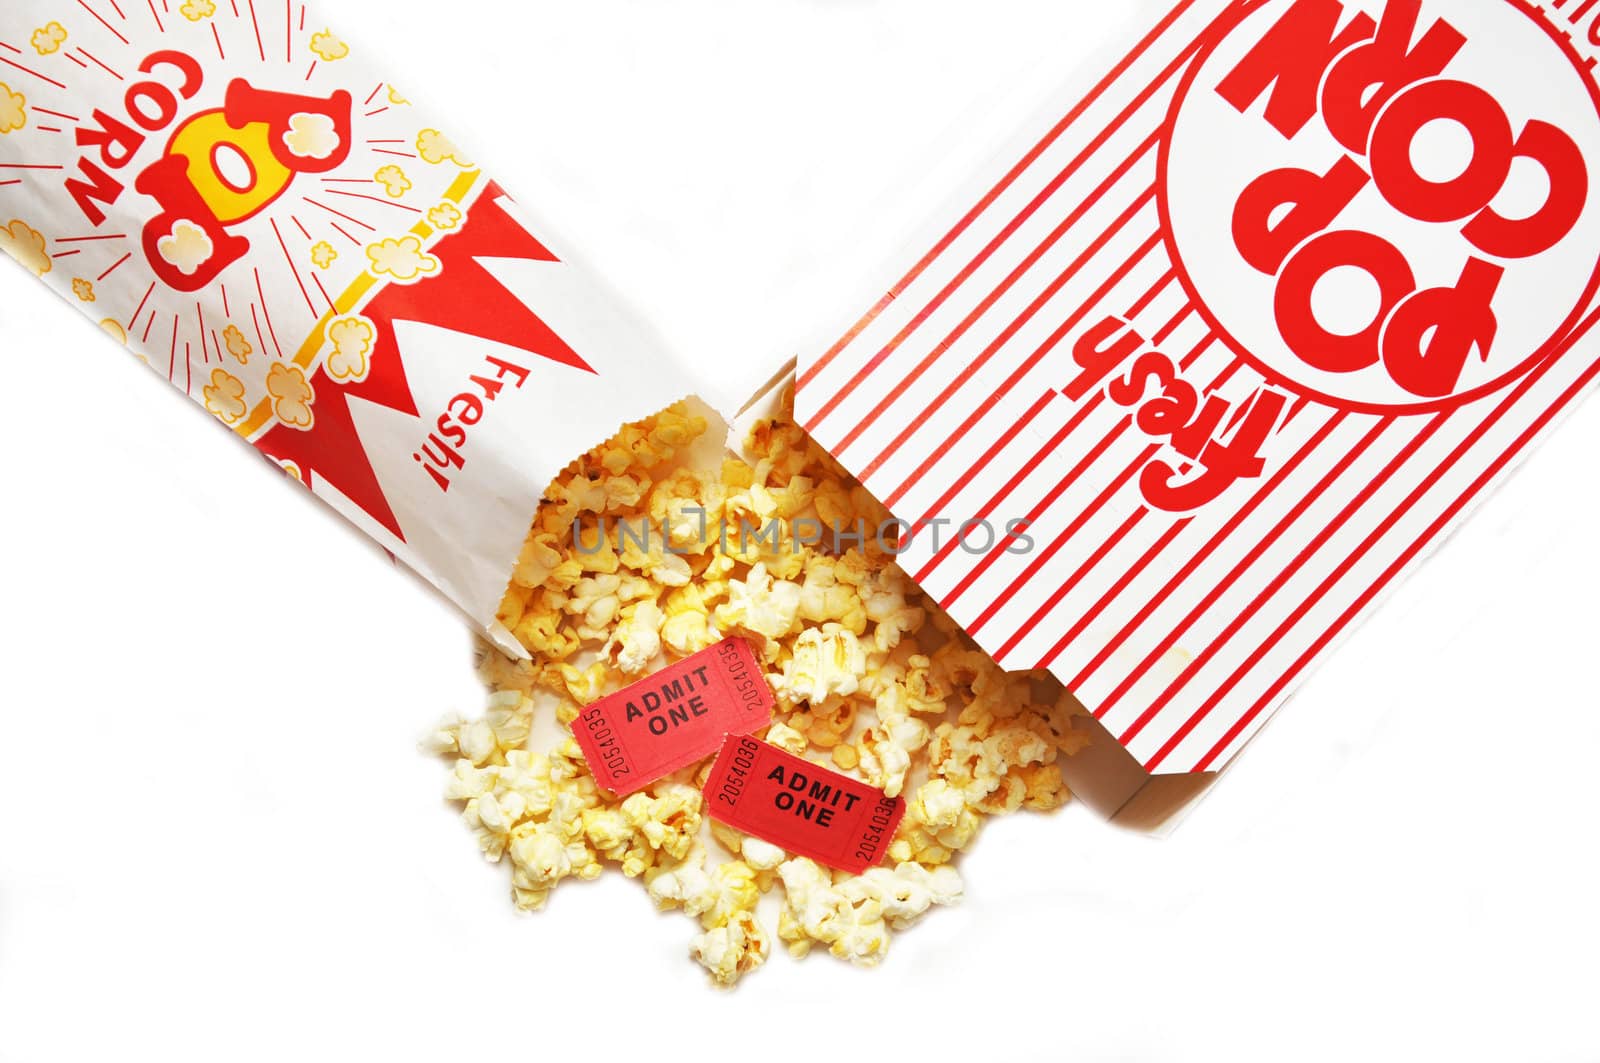 Popcorn and movie tickets.